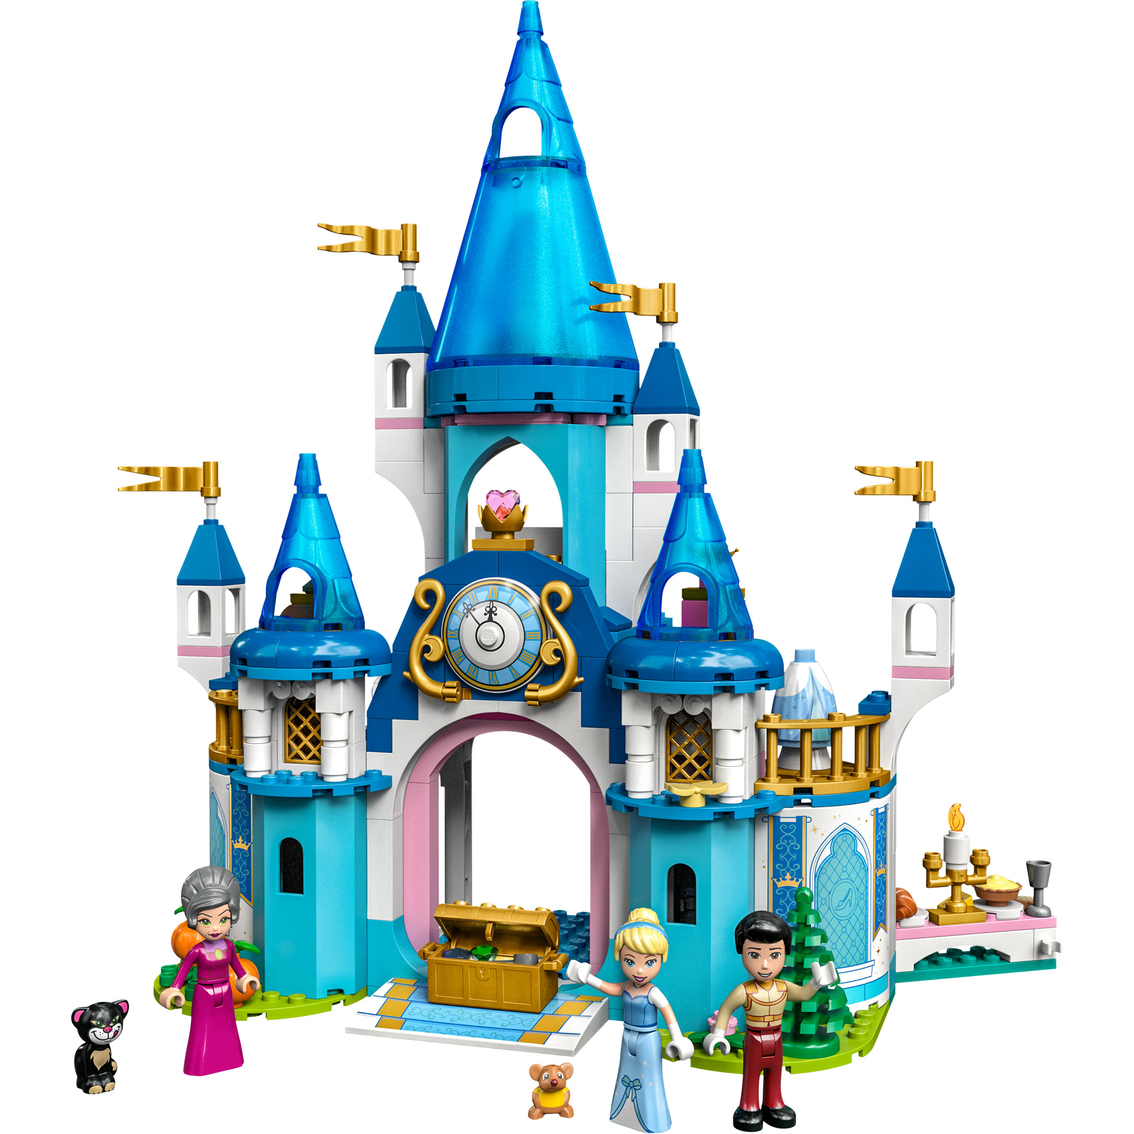 LEGO Disney Princess Cinderella and Prince Charming's Castle Playset 43206 - Image 3 of 3